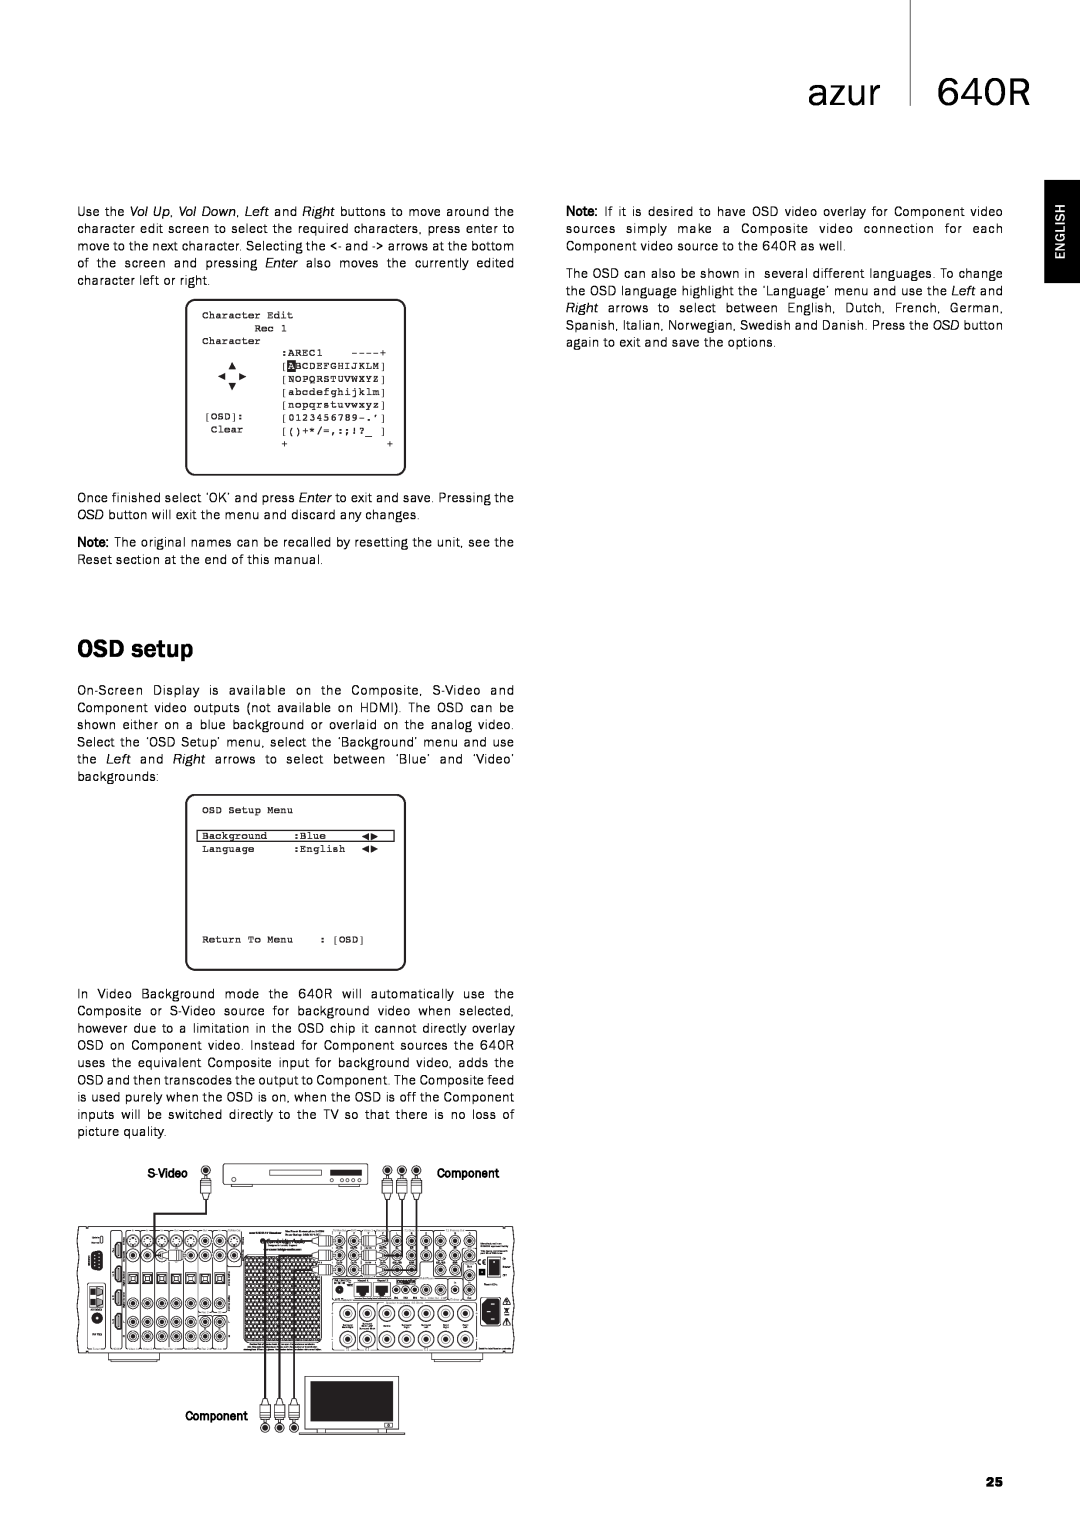 Cambridge Audio 640Razur user manual OSD setup, English 